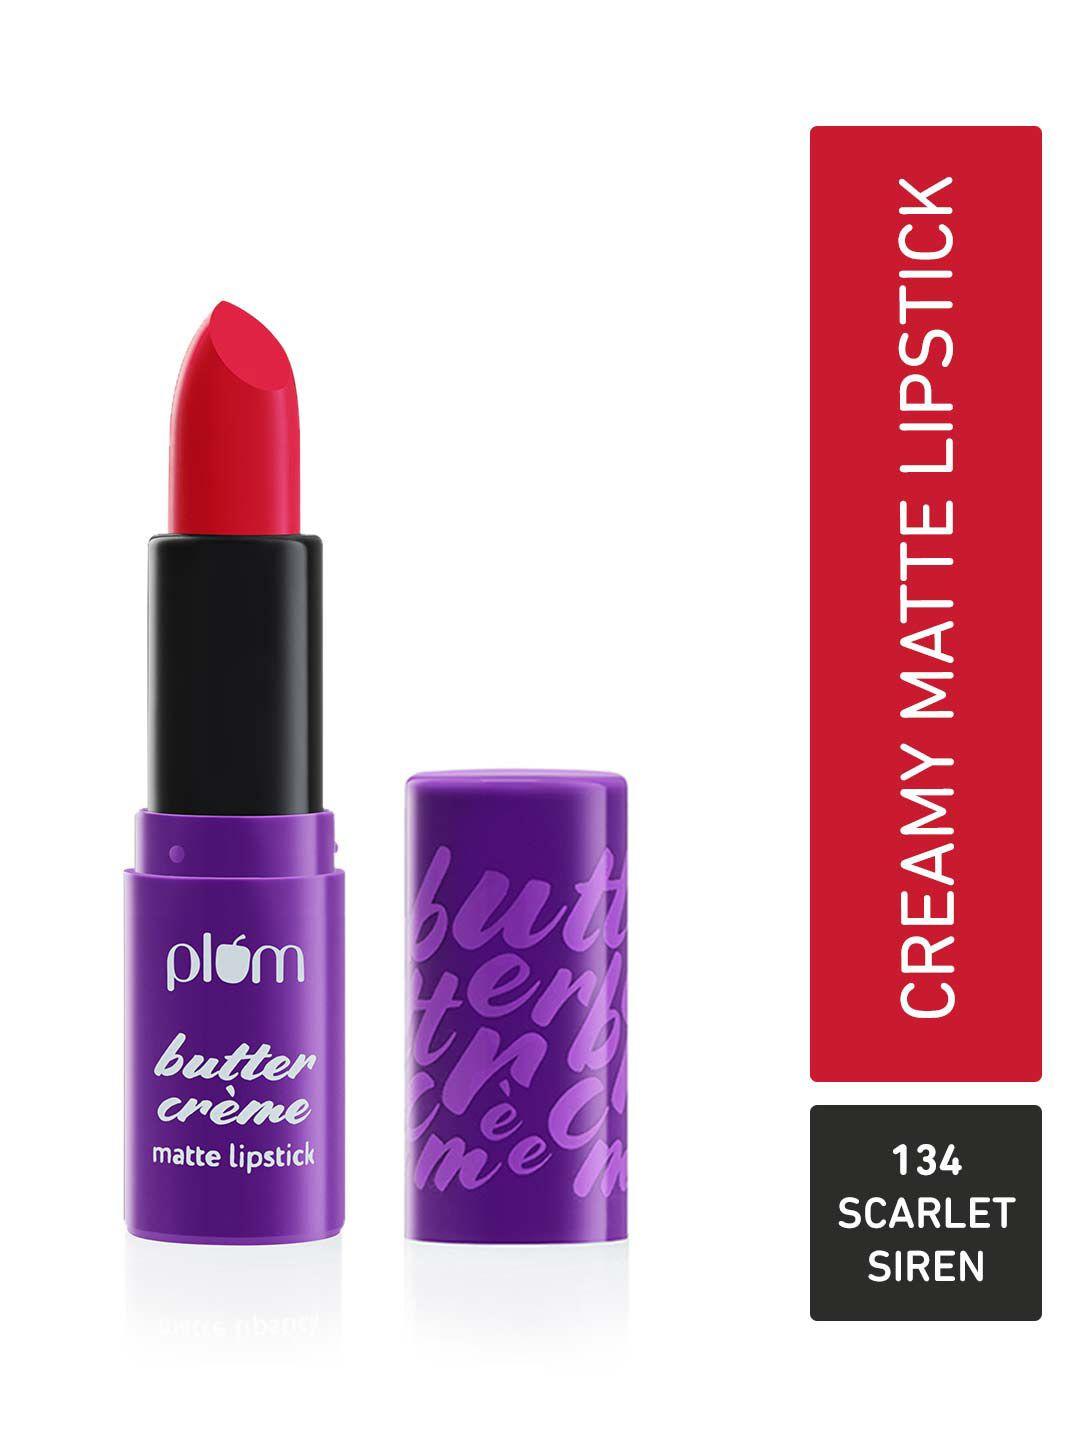 plum butter creme highly pigmented lightweight matte lipstick - scarlet siren 134